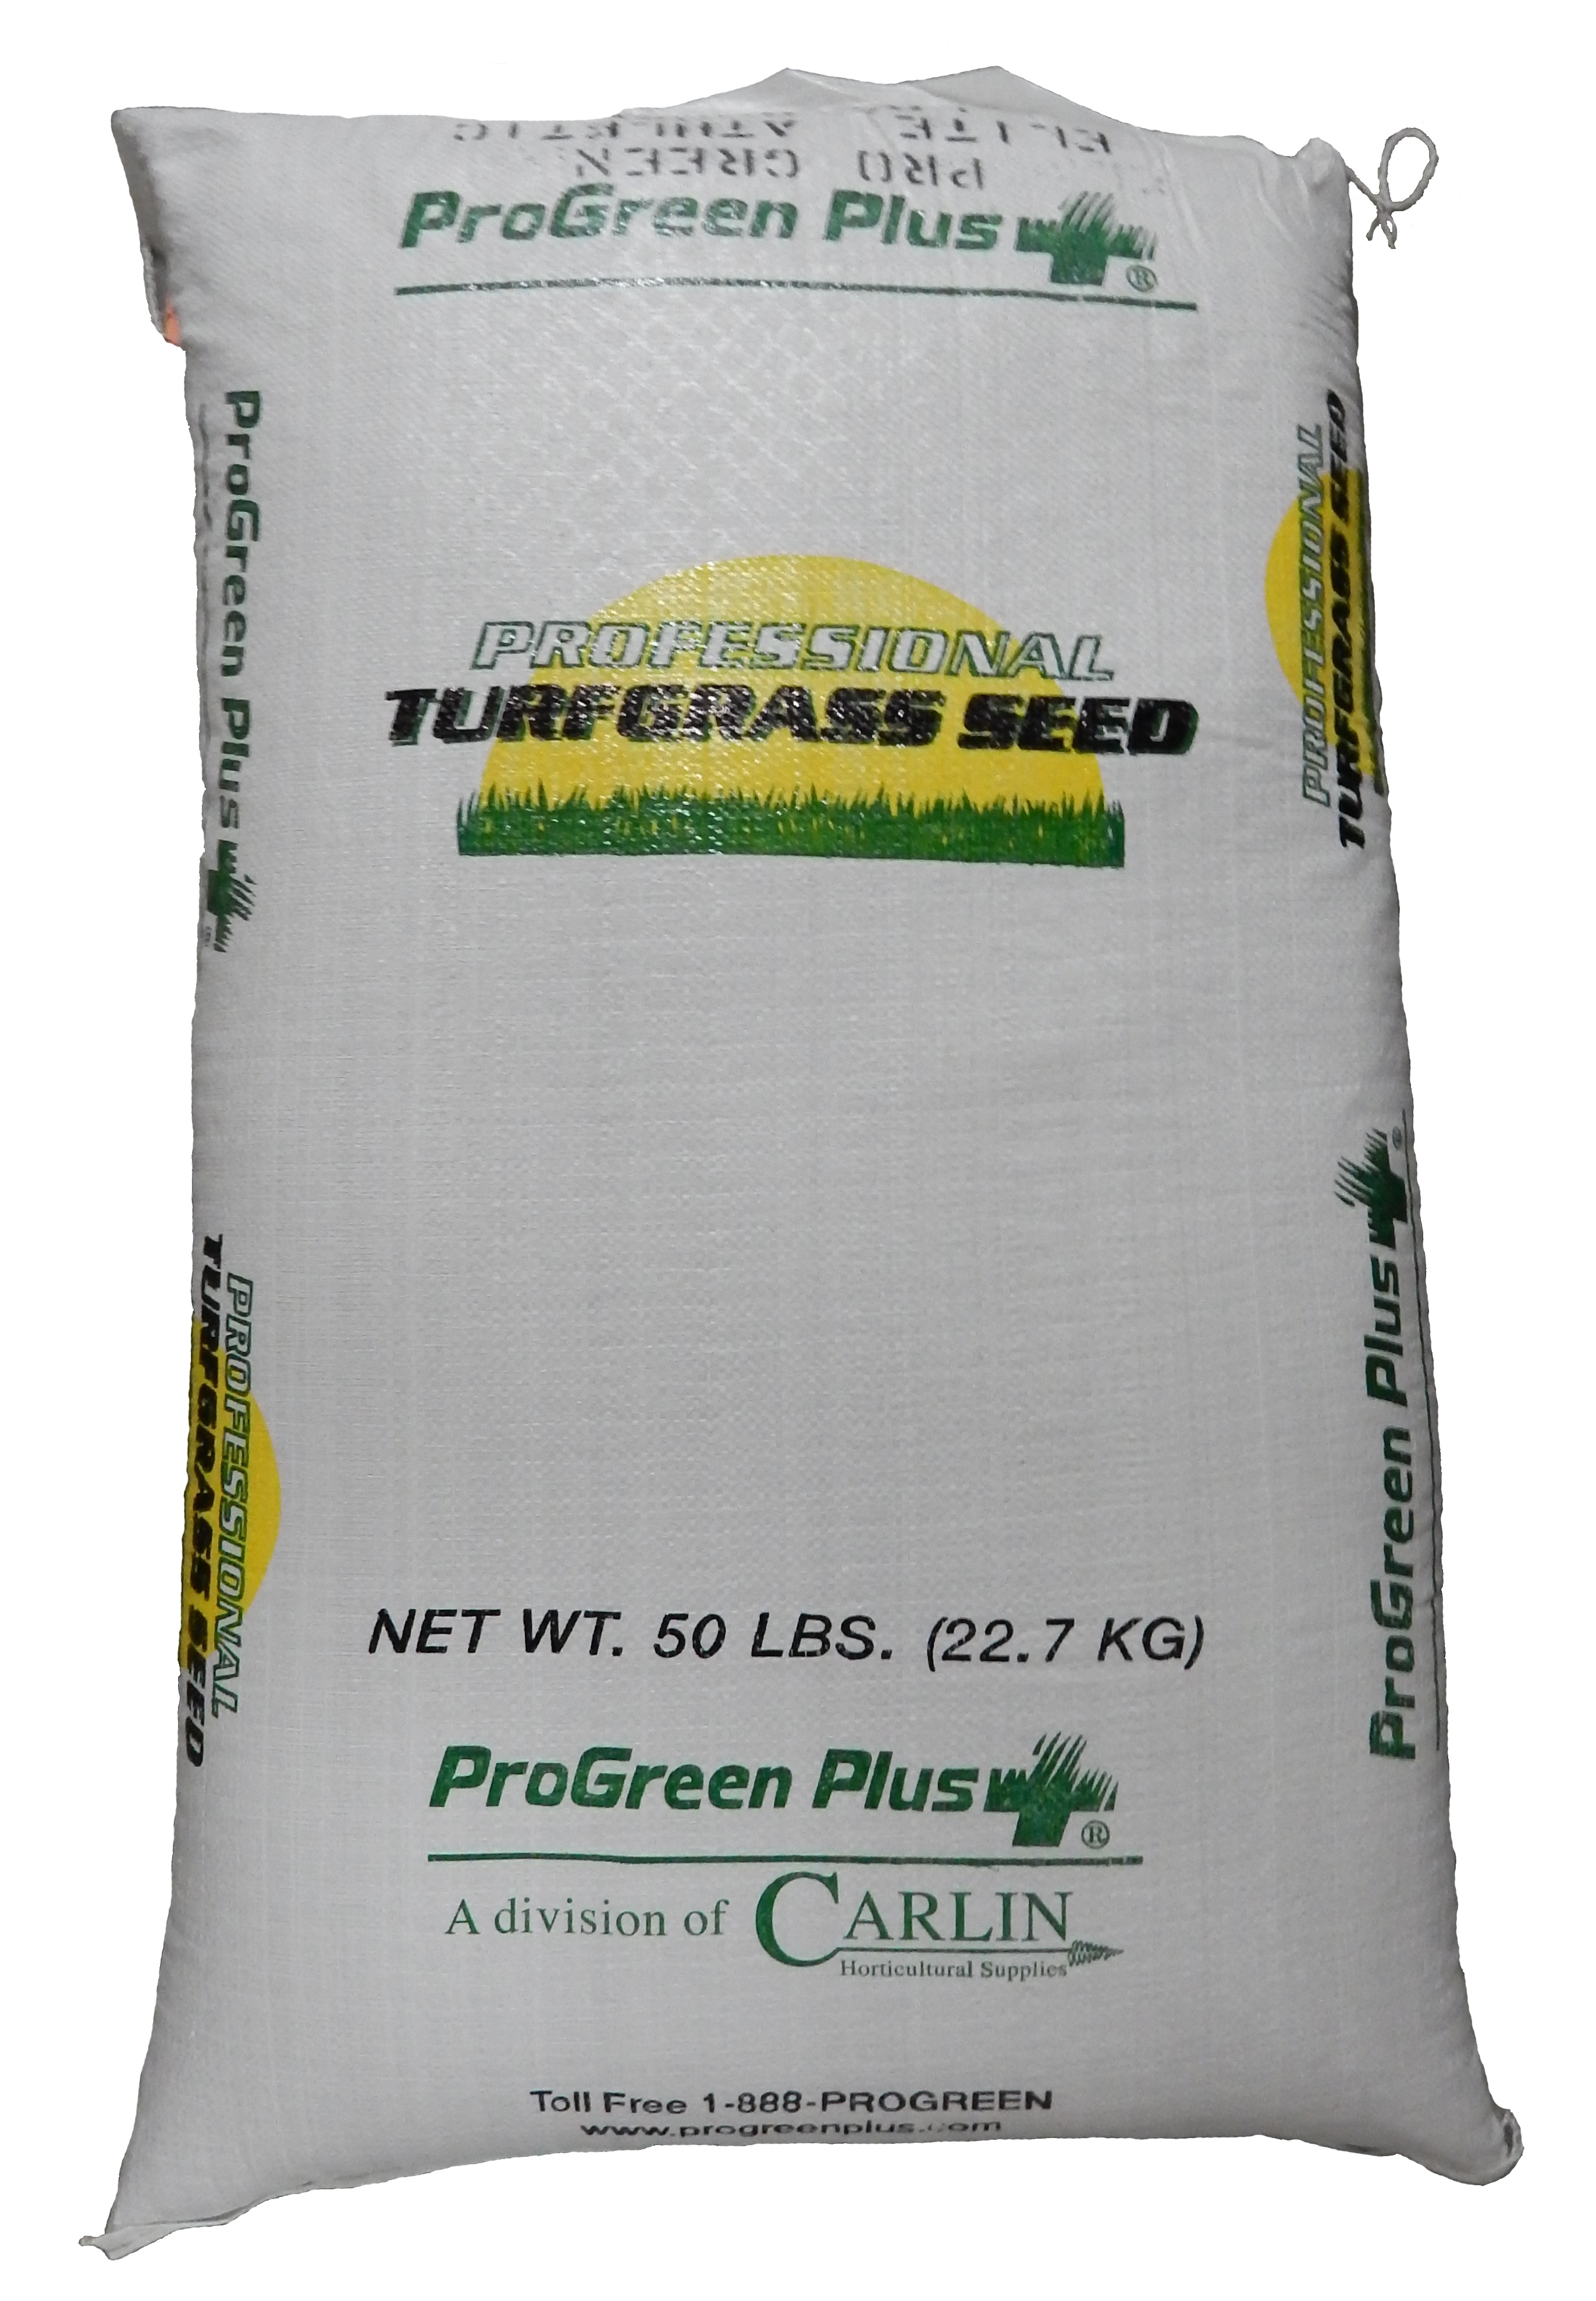 ProGreen Elite Athletic Coated Mix - 50lb Bag - Turfgrass Seed